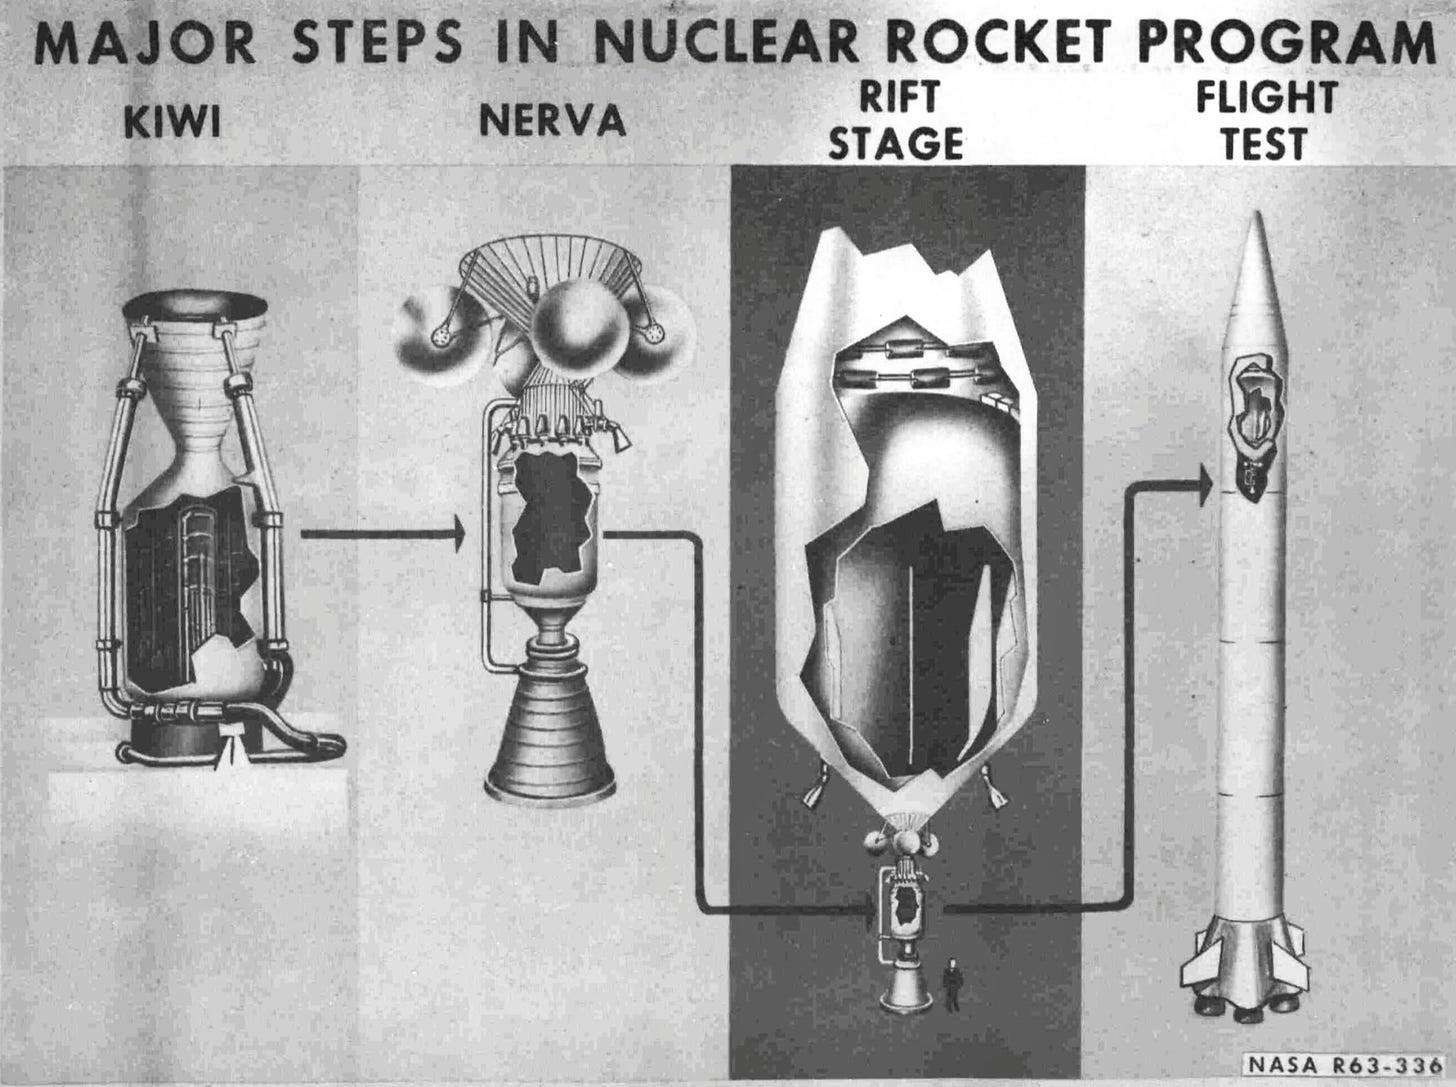 Casillic on Twitter: "Nuclear Propulsion- An Emerging Technology 1963 # Nuclear #Rocket #Engines #Space https://t.co/aTSRaKO7Fm" / Twitter